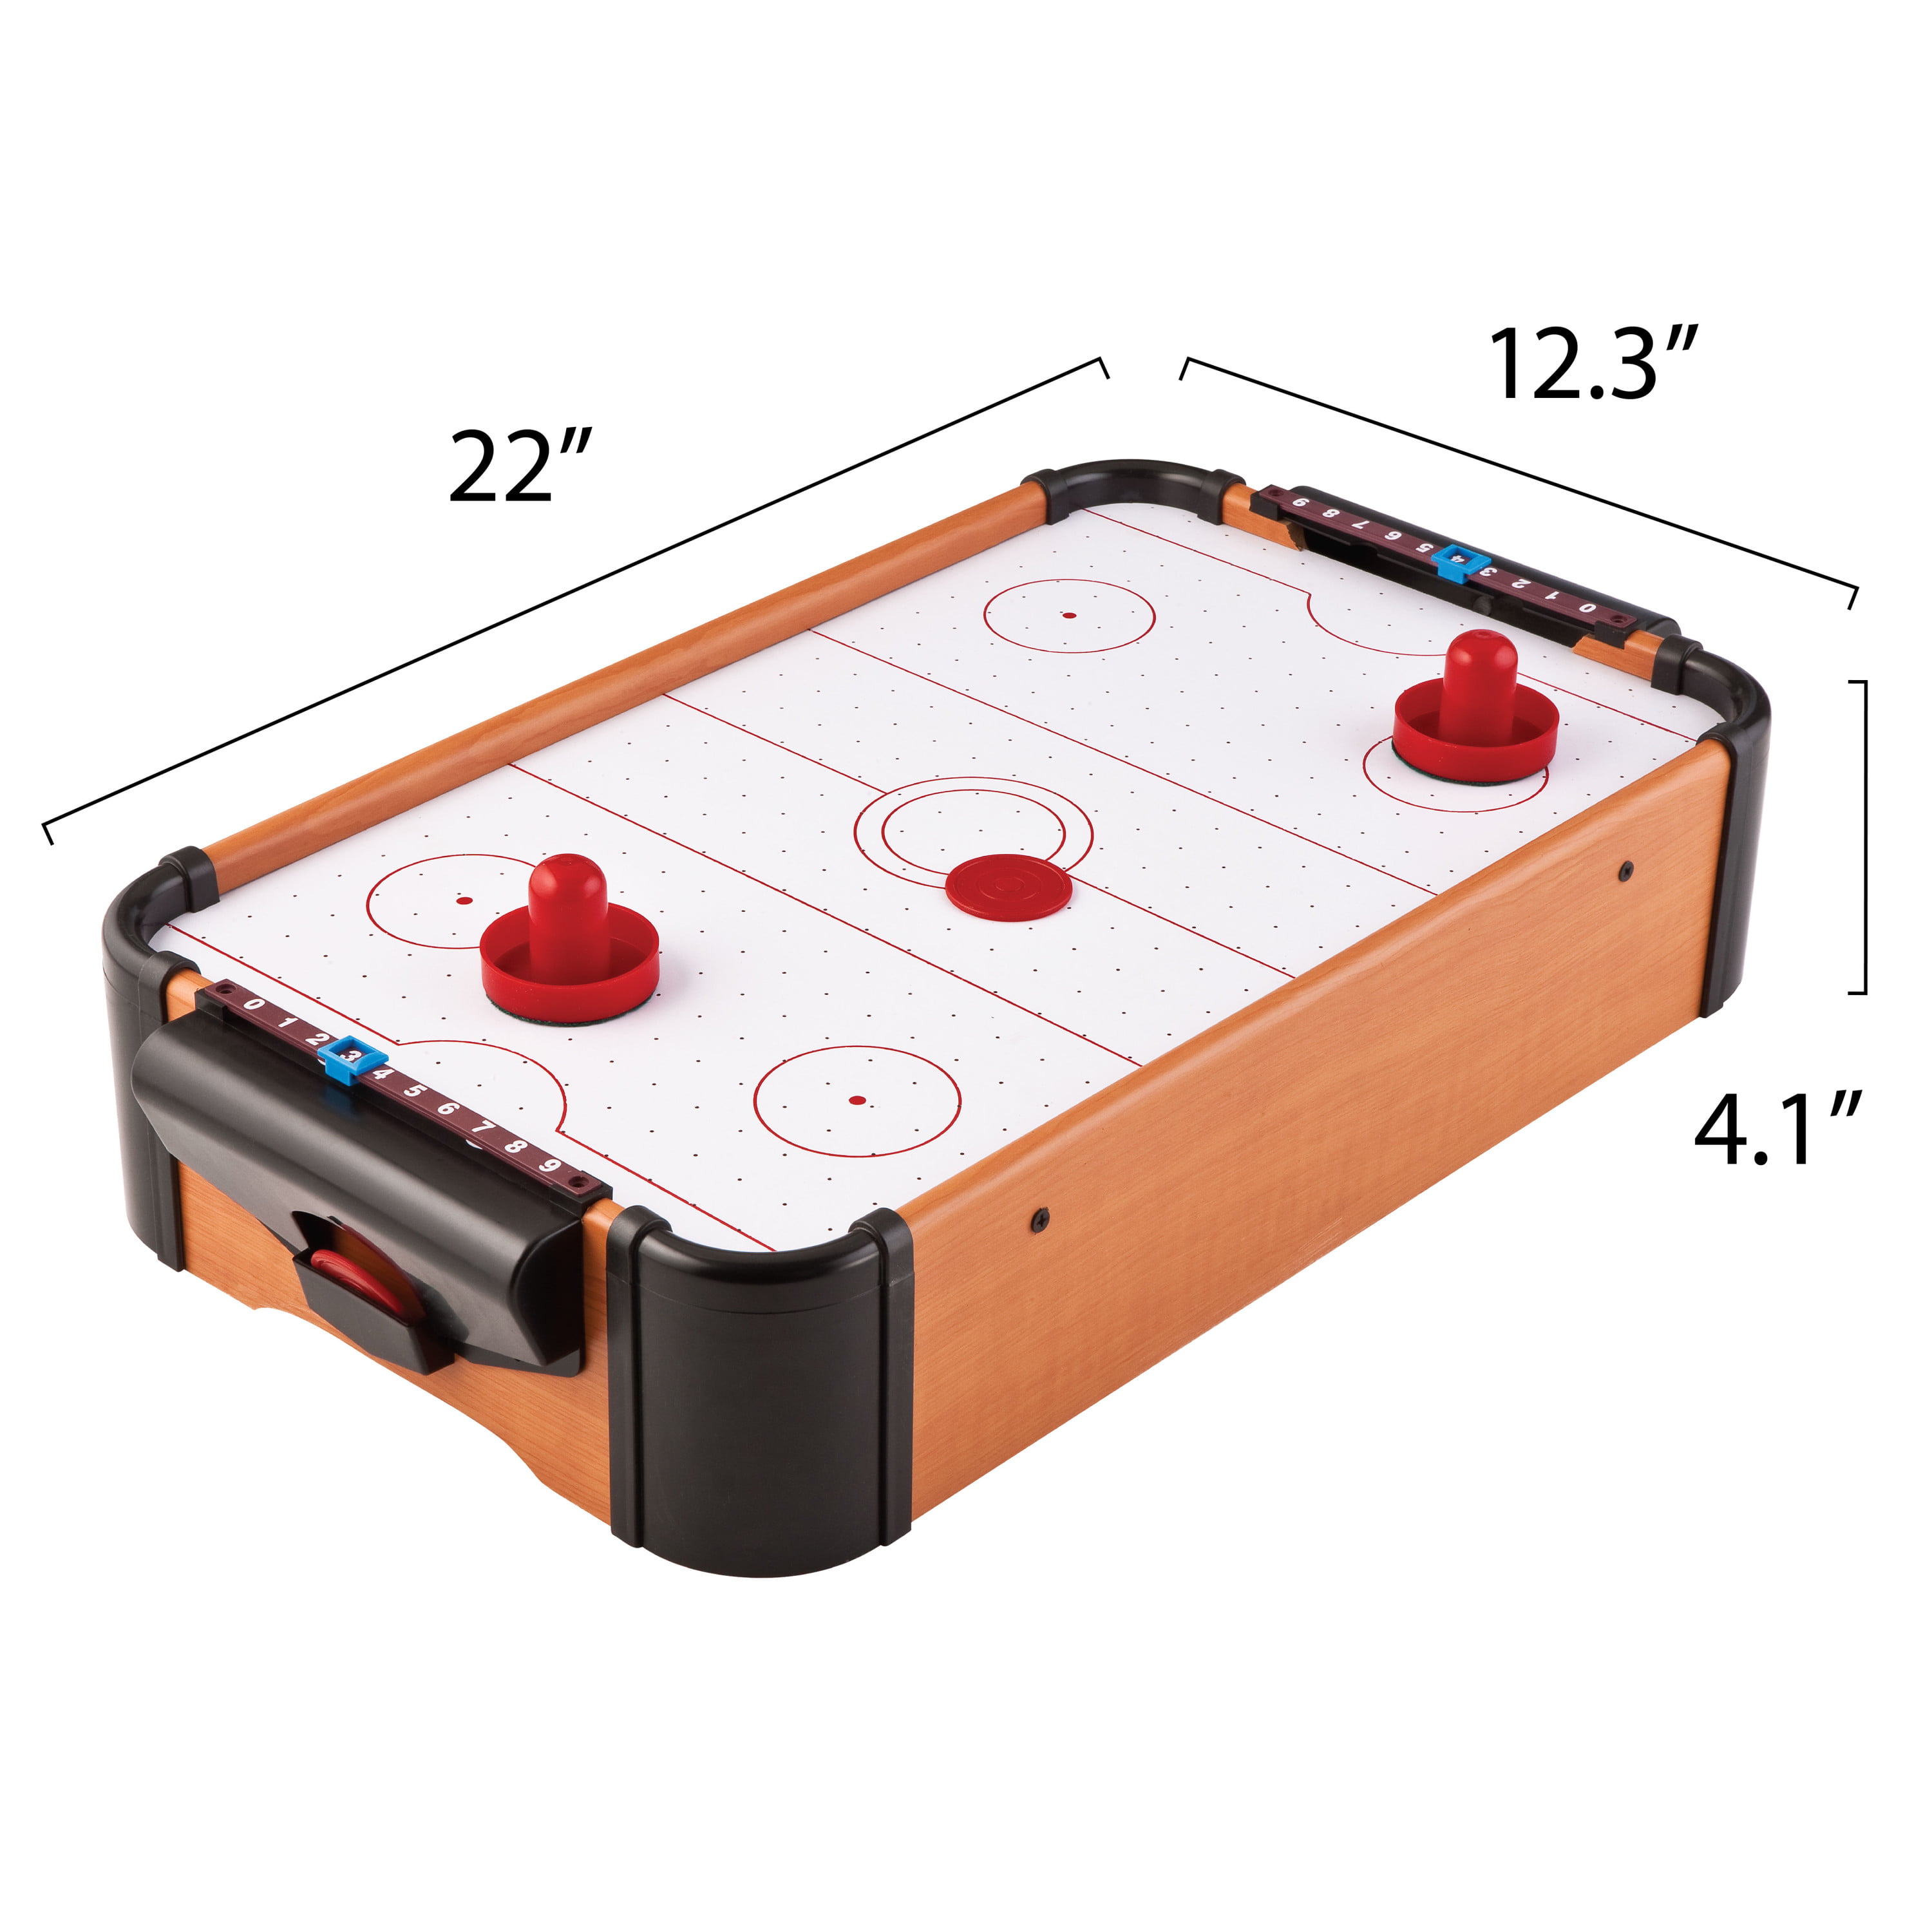 Toy Time 403165AKS Mini Arcade Air Hockey Tabletop Game Battery Operat